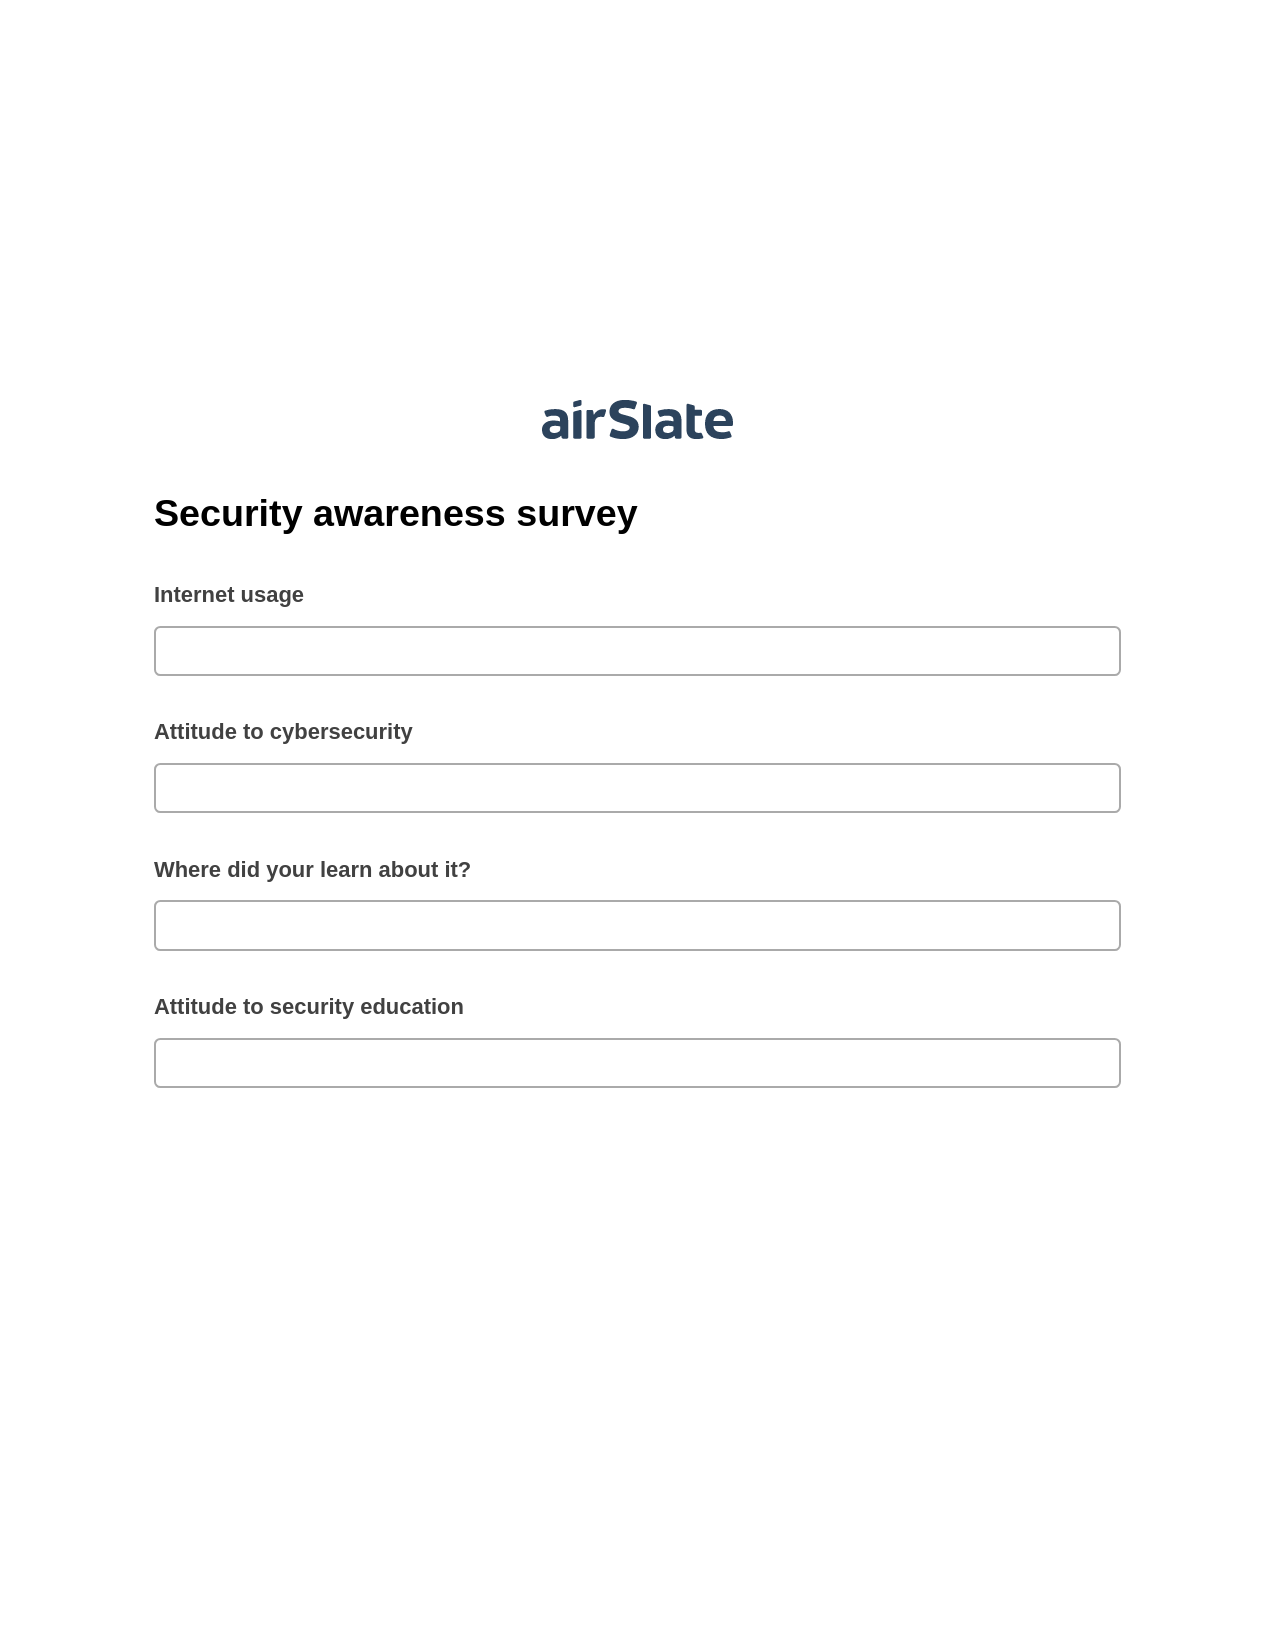 Security awareness survey Pre-fill from Google Sheet Dropdown Options Bot, Invoke Salesforce Process Bot, Post-finish Document Bot